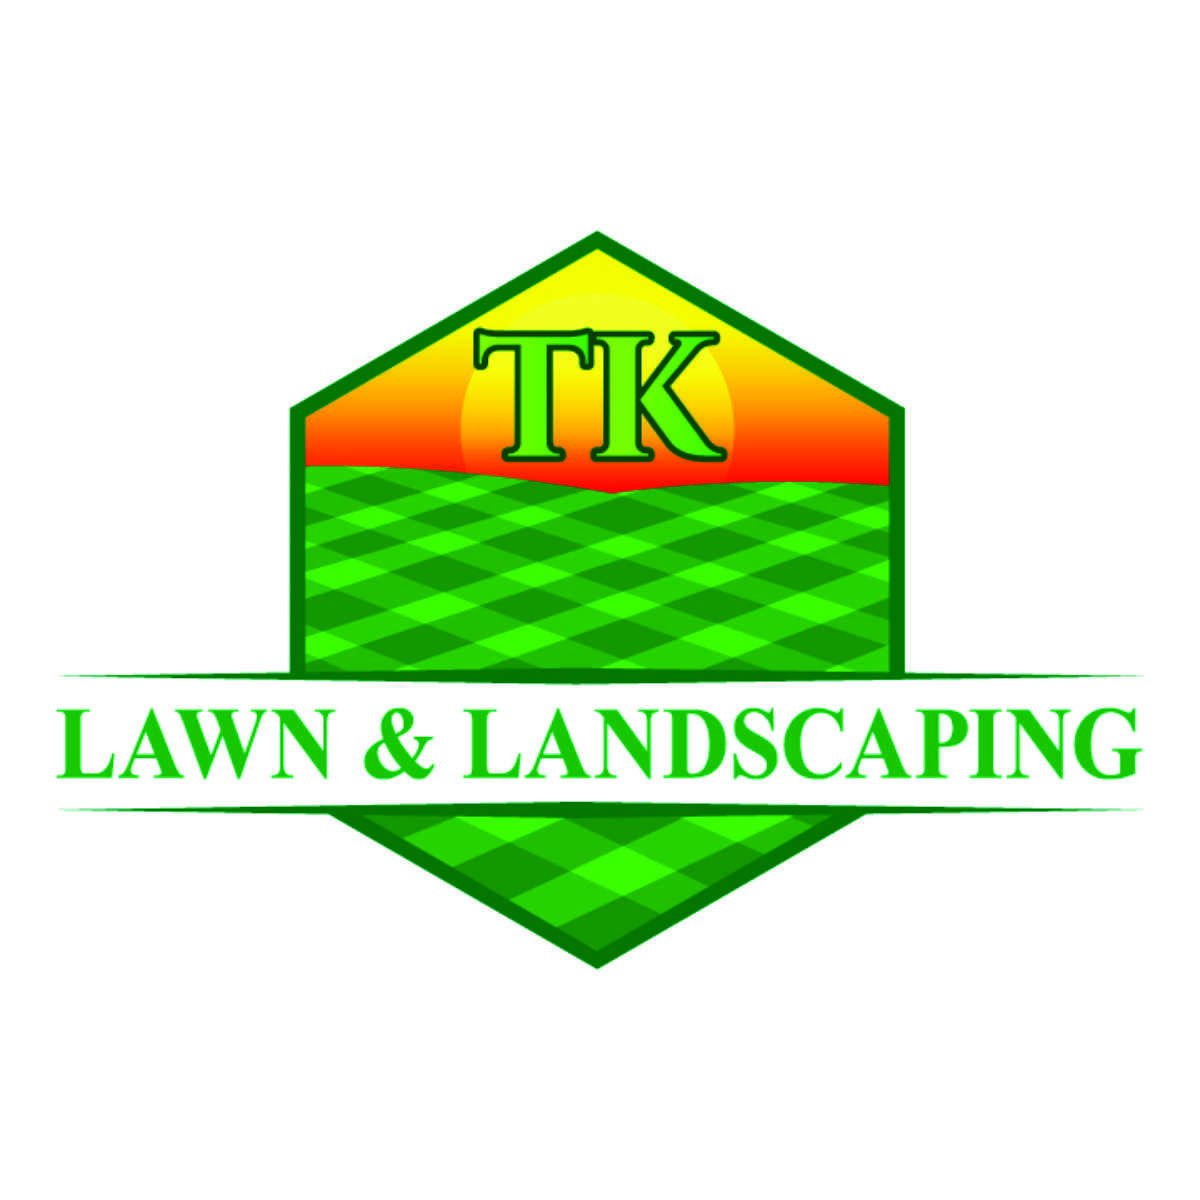 TK Lawn & Landscaping Logo